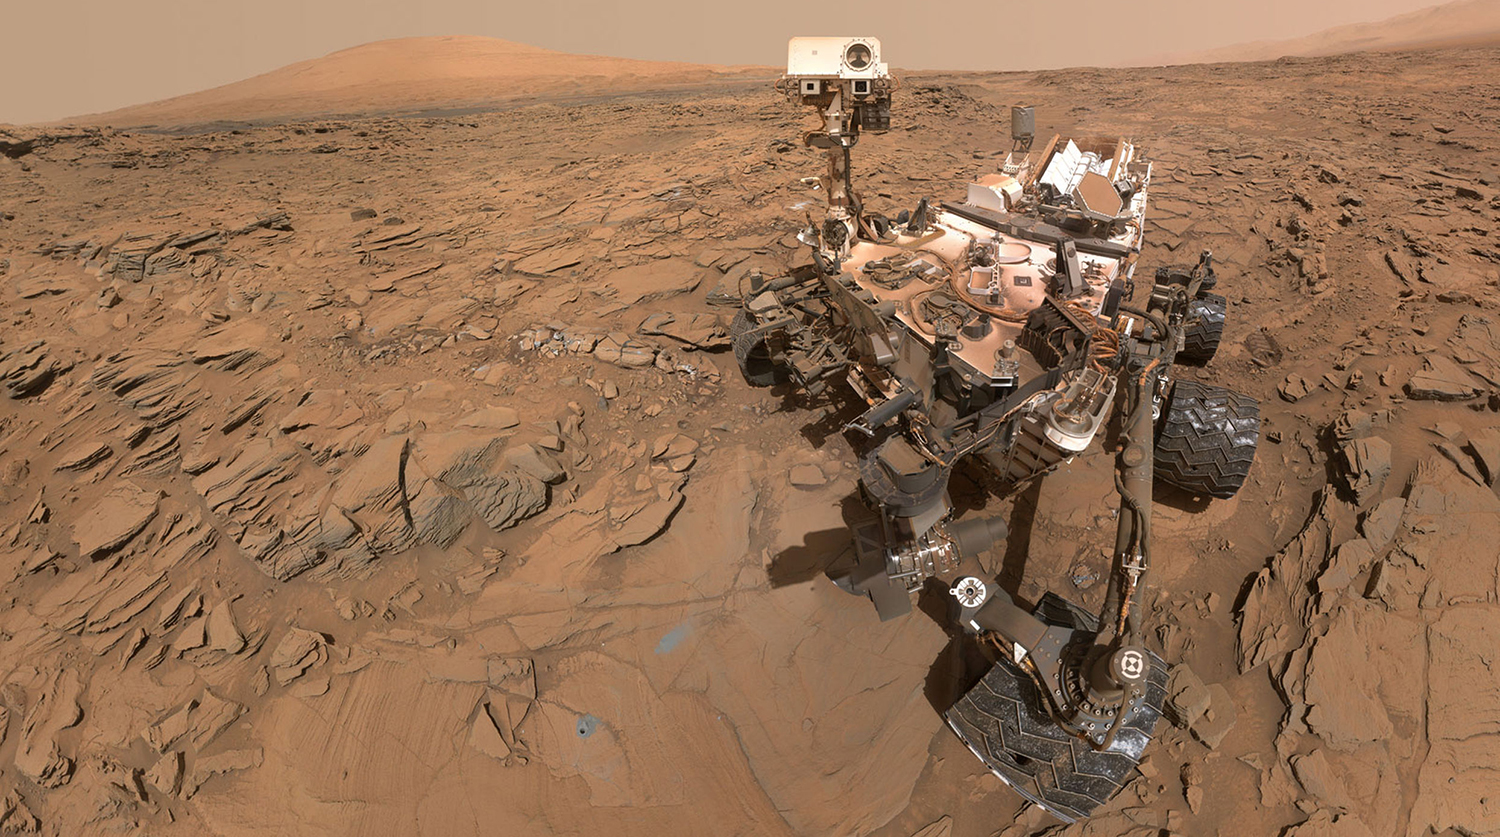 NASA's Curiosity rover detected a variety of organic molecules on Mars. Credit: NASA/JPL-Caltech